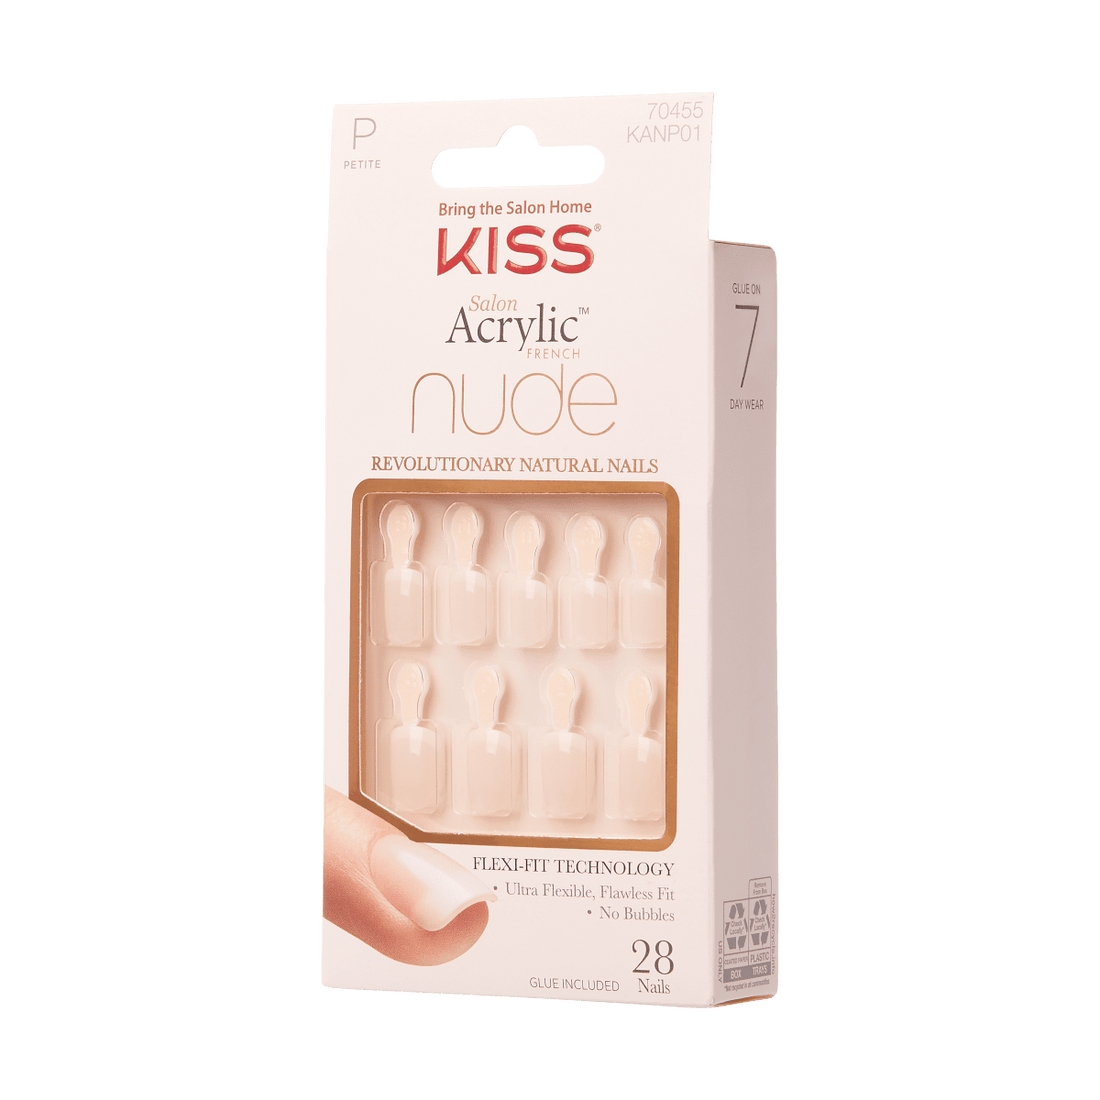 KISS Salon Acrylic Nude French Nails - Holla Back